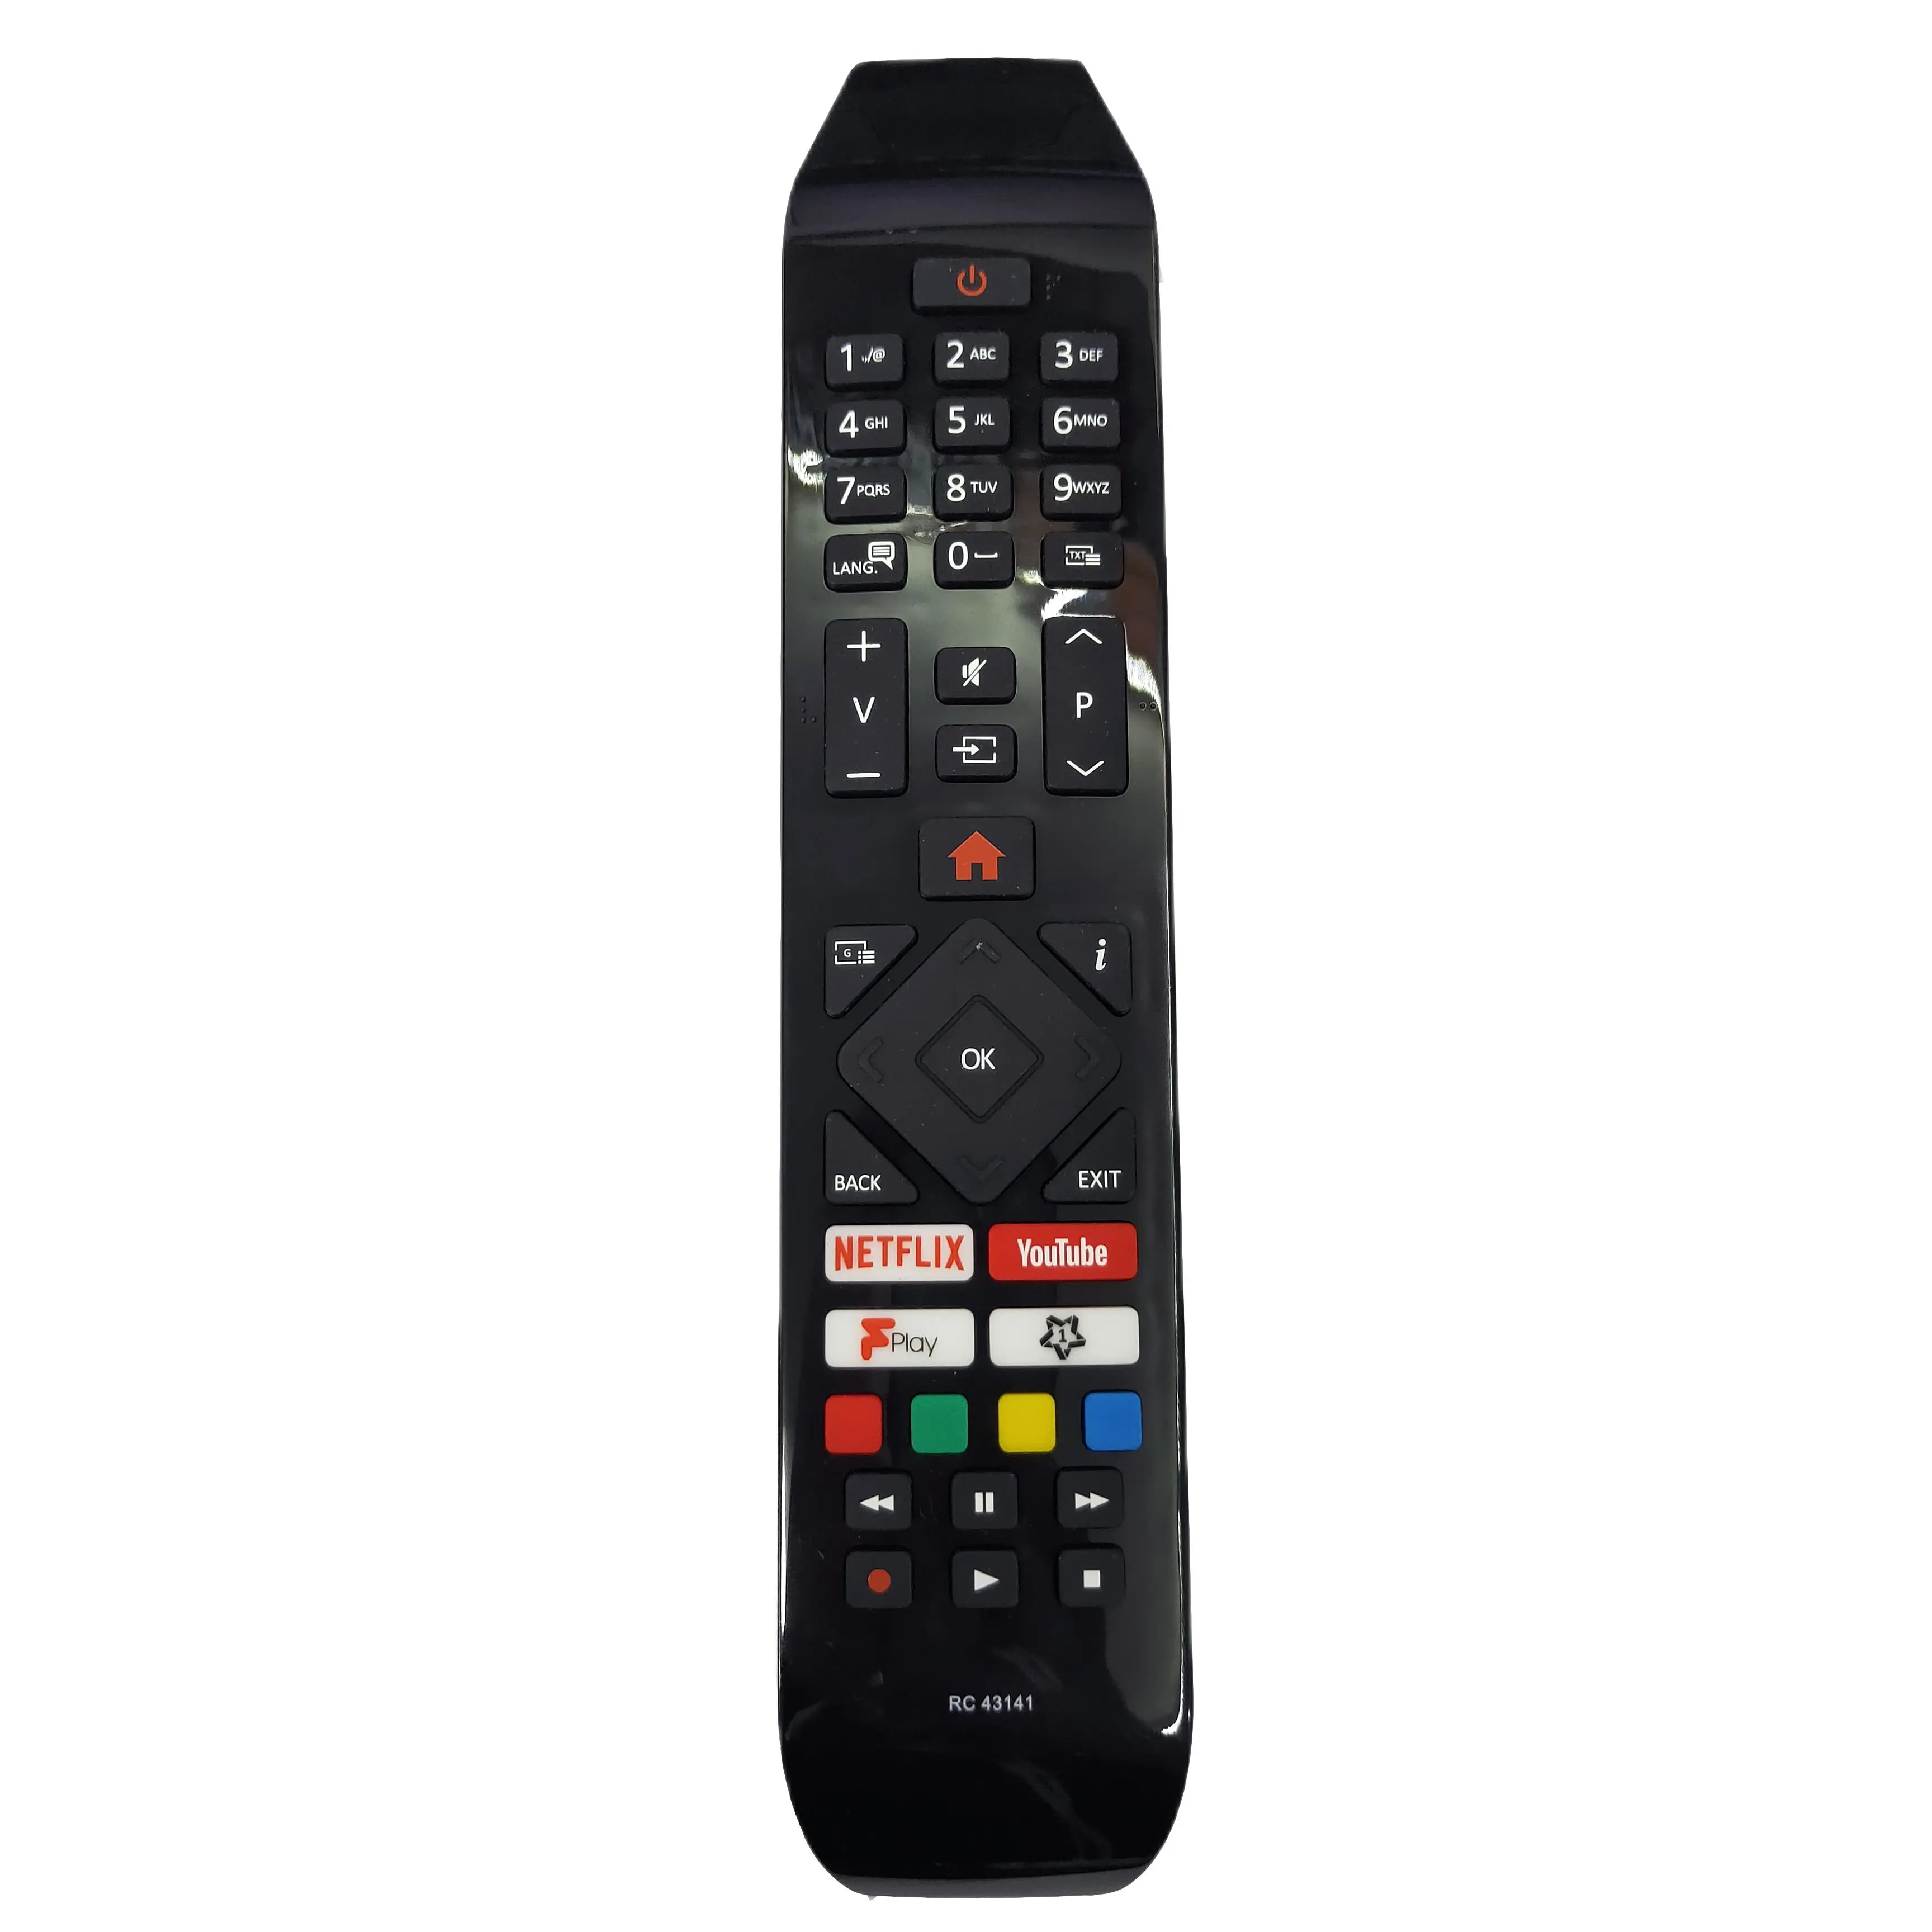 

New RC43141 For Hitachi TV Remote Control 24HB21T65U 32HB26T61UA 43HB26T72U 43HK25T74U With Netflix Youtube Fplay Buttons